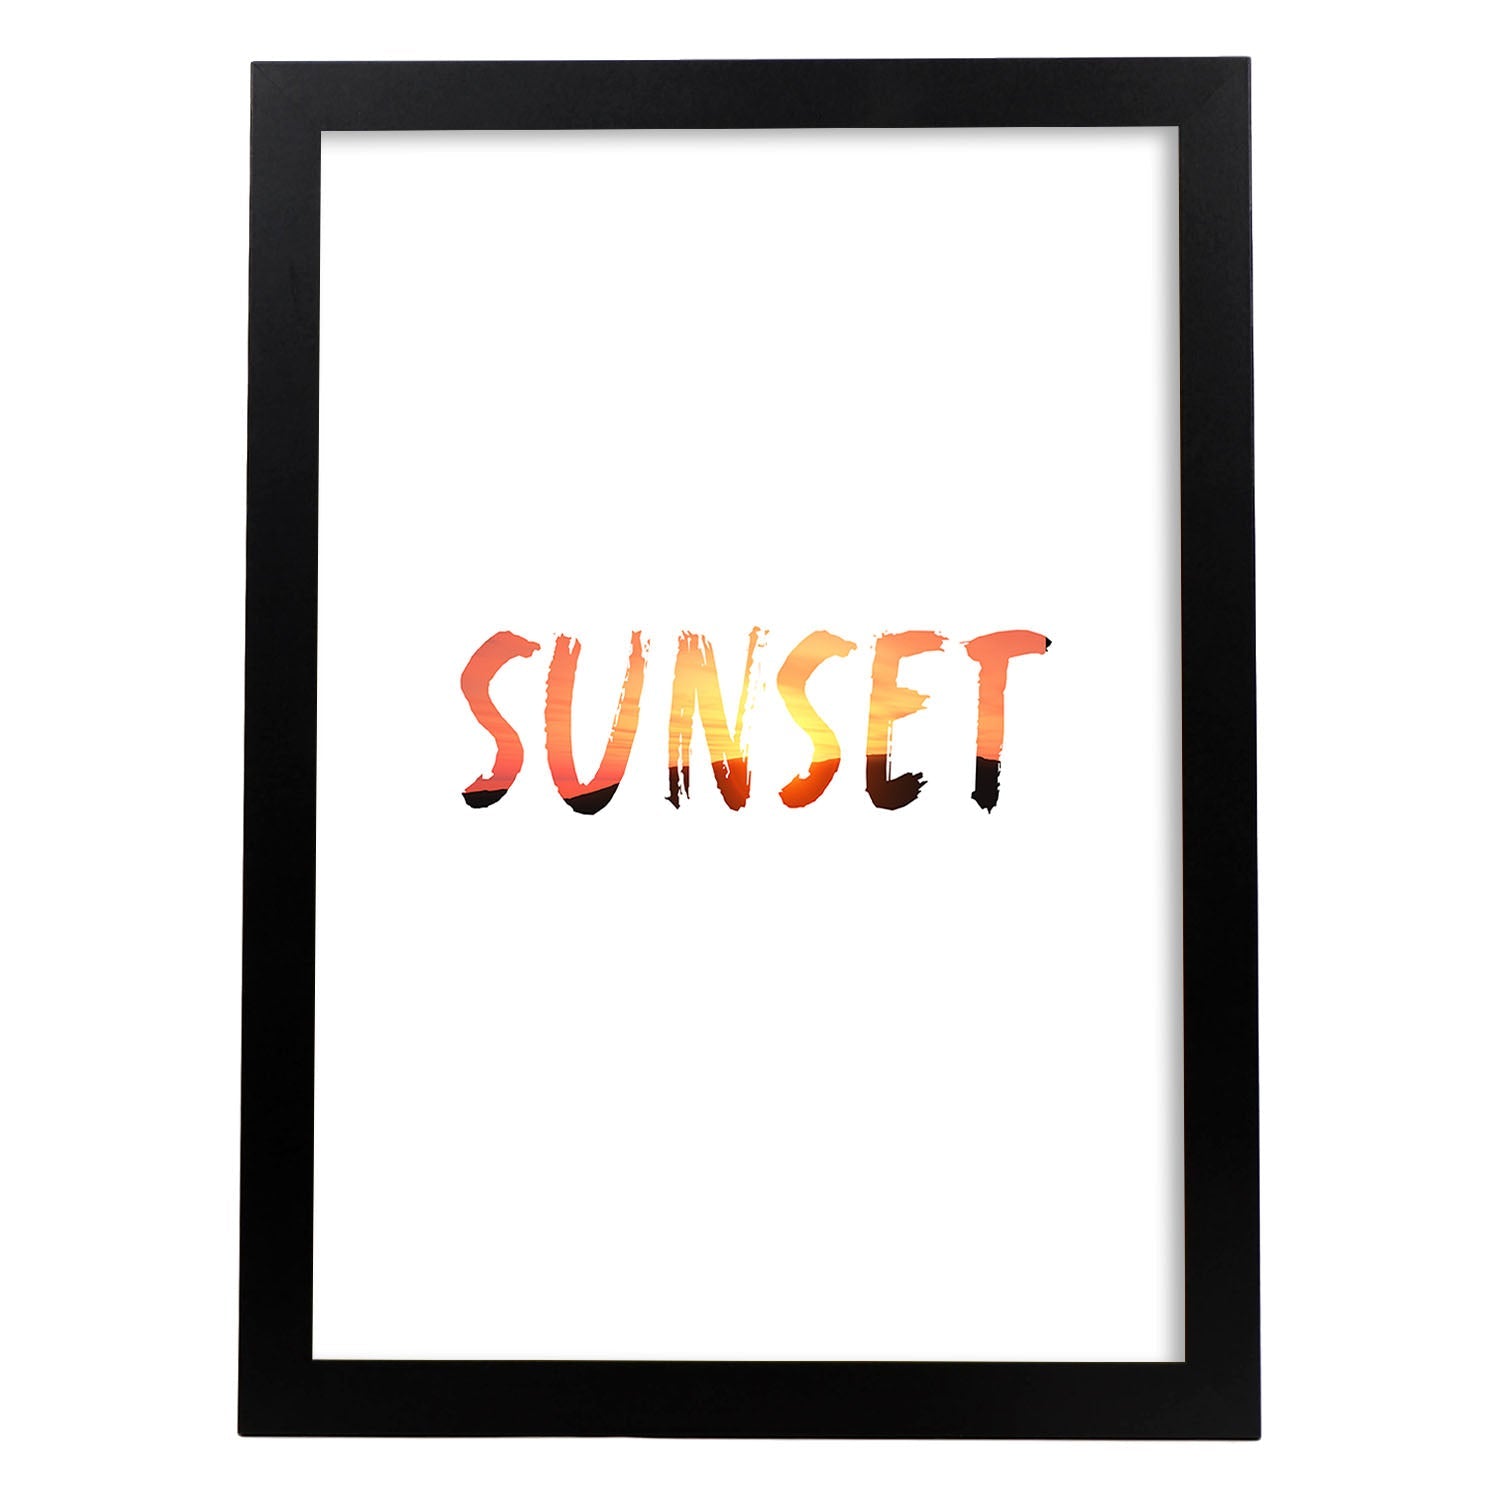 Lamina artistica decorativa con ilustración de sunset estilo Mensaje inspiracional-Artwork-Nacnic-A3-Marco Negro-Nacnic Estudio SL